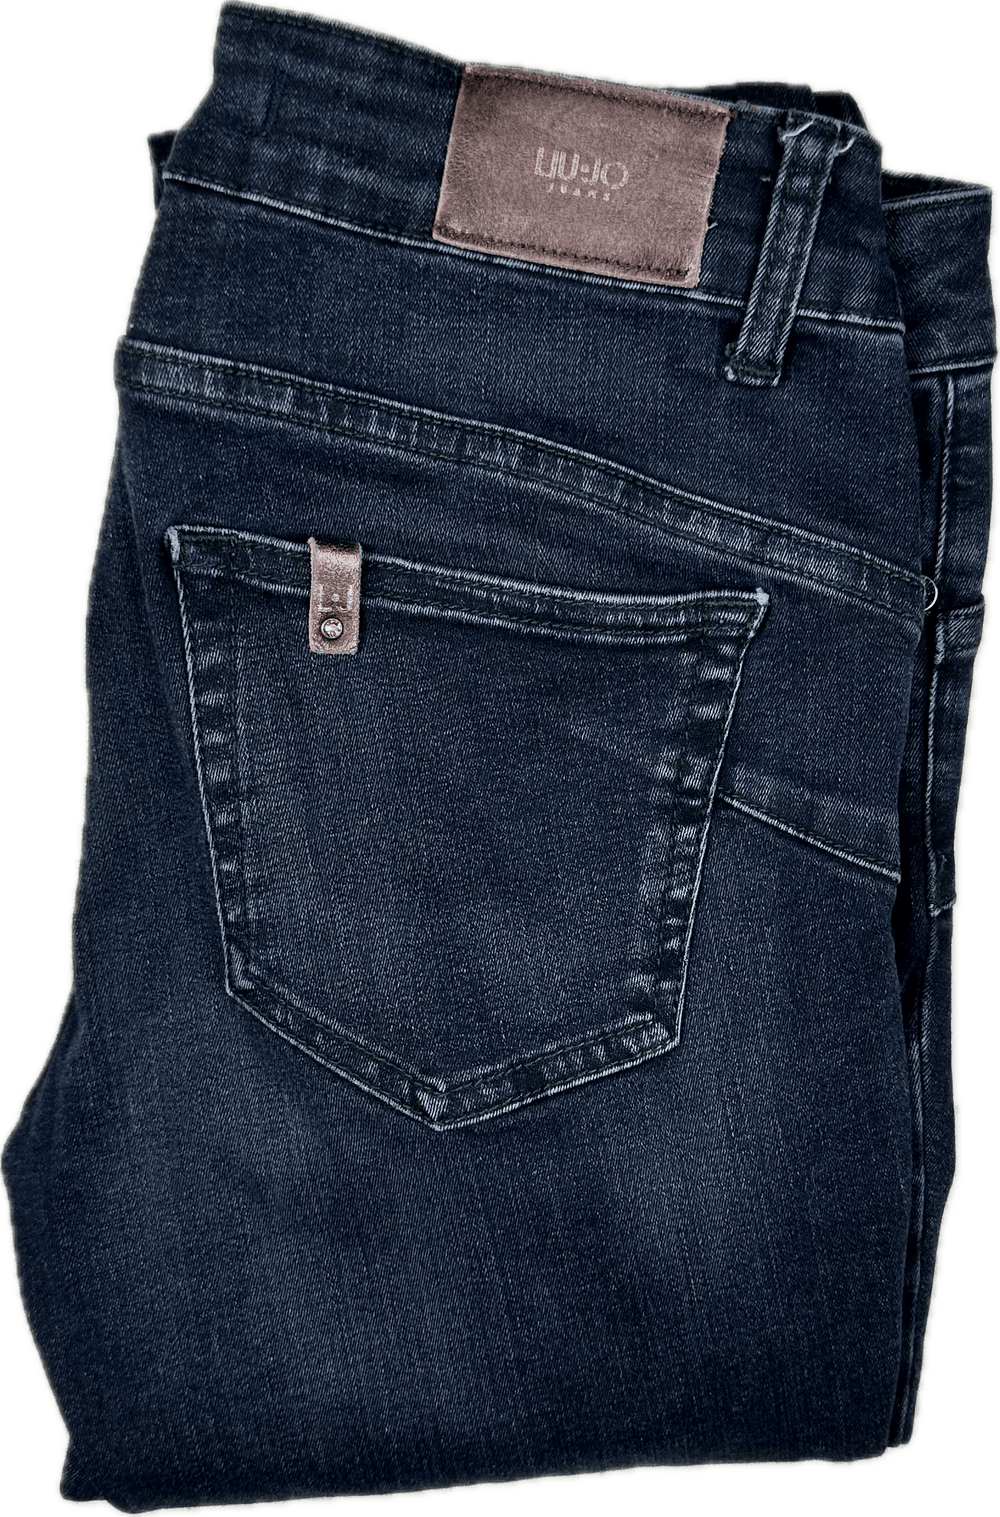 LUI-JO Italian Crystal Stud Charcoal Stretch Skinny Jeans -Size 30 - Jean Pool